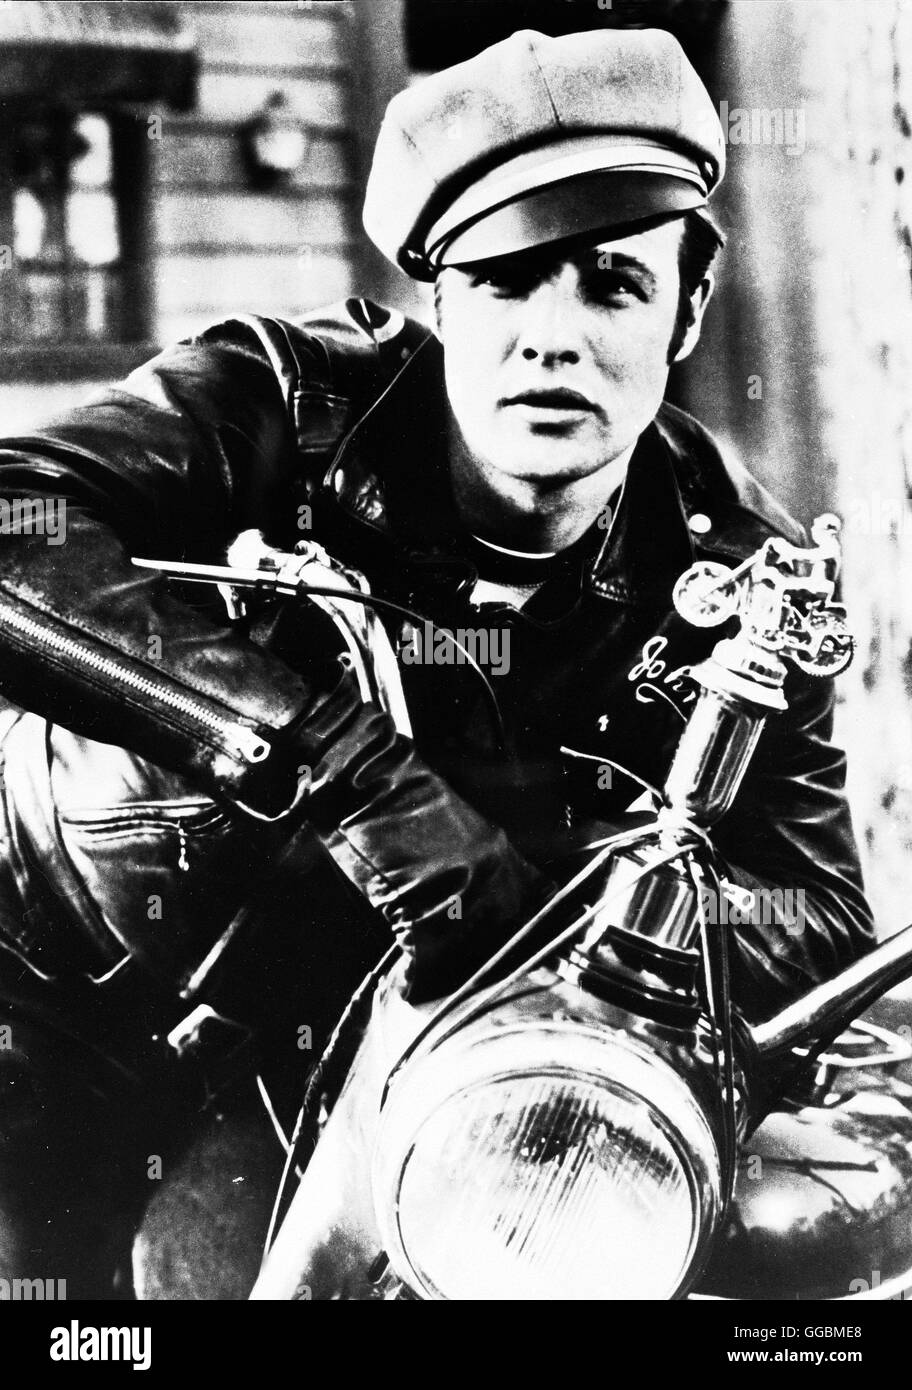 DER WILDE / THE WILD ONE USA 1953 / Laslo Benedek Marlon Brando als Johnny,  Motorrad, Motorradkappe, Lederjacke, Regie: Laslo Benedek aka. THE WILD ONE  Stockfotografie - Alamy